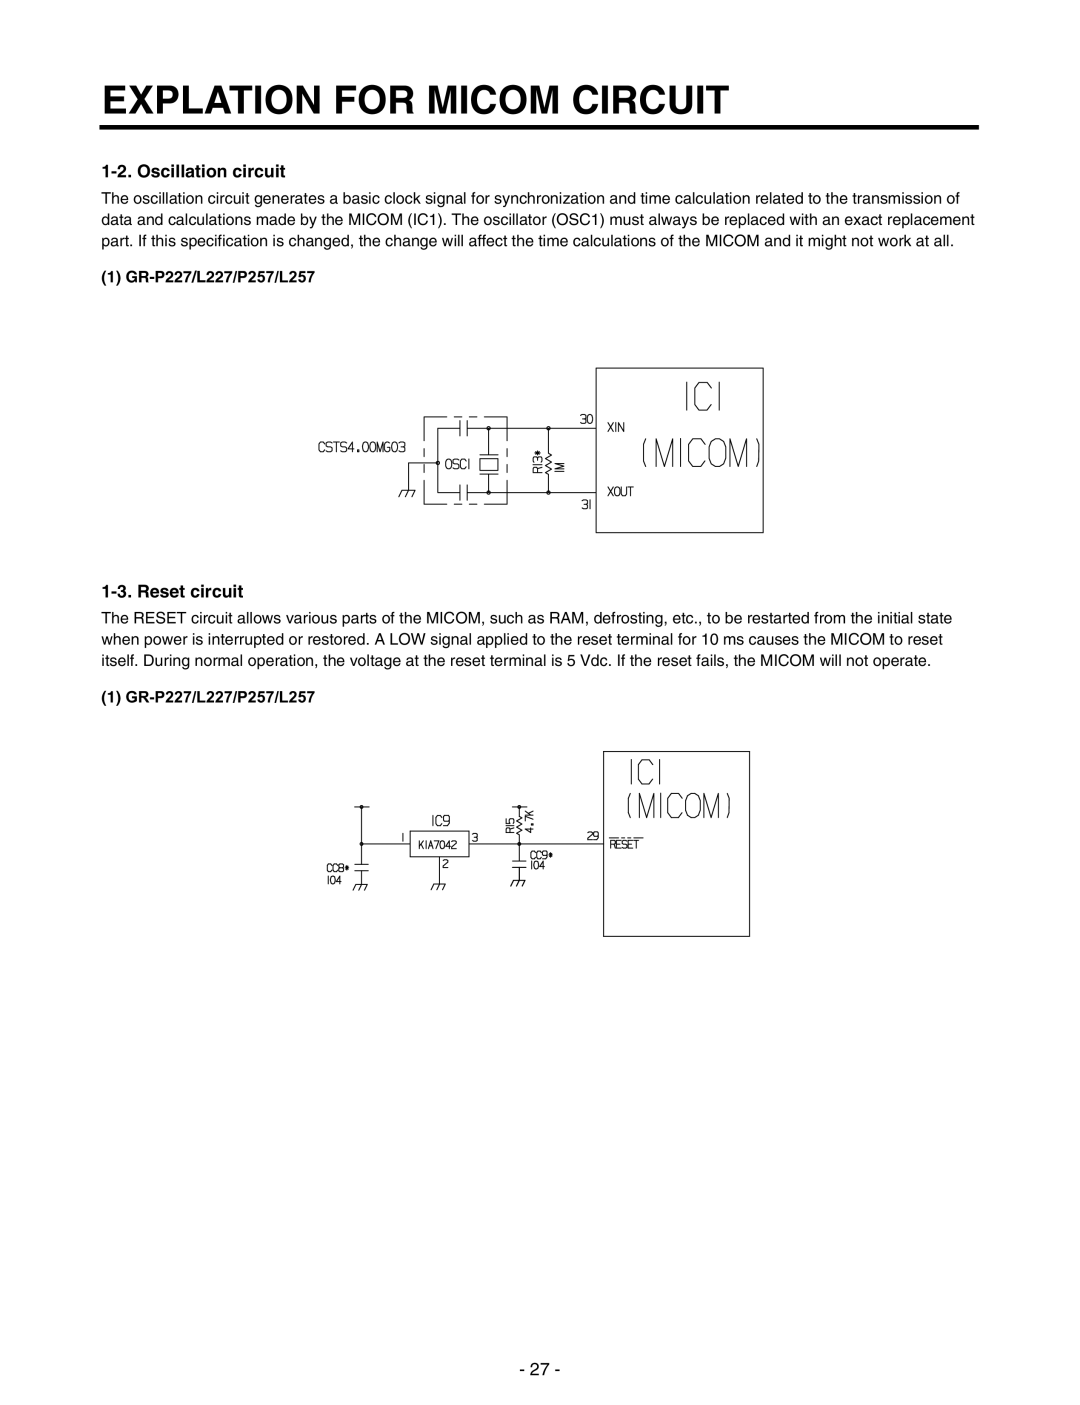 LG Electronics GR-P257/L257 Oscillation circuit, Reset circuit, Explation For Micom Circuit, GR-P227/L227/P257/L257 